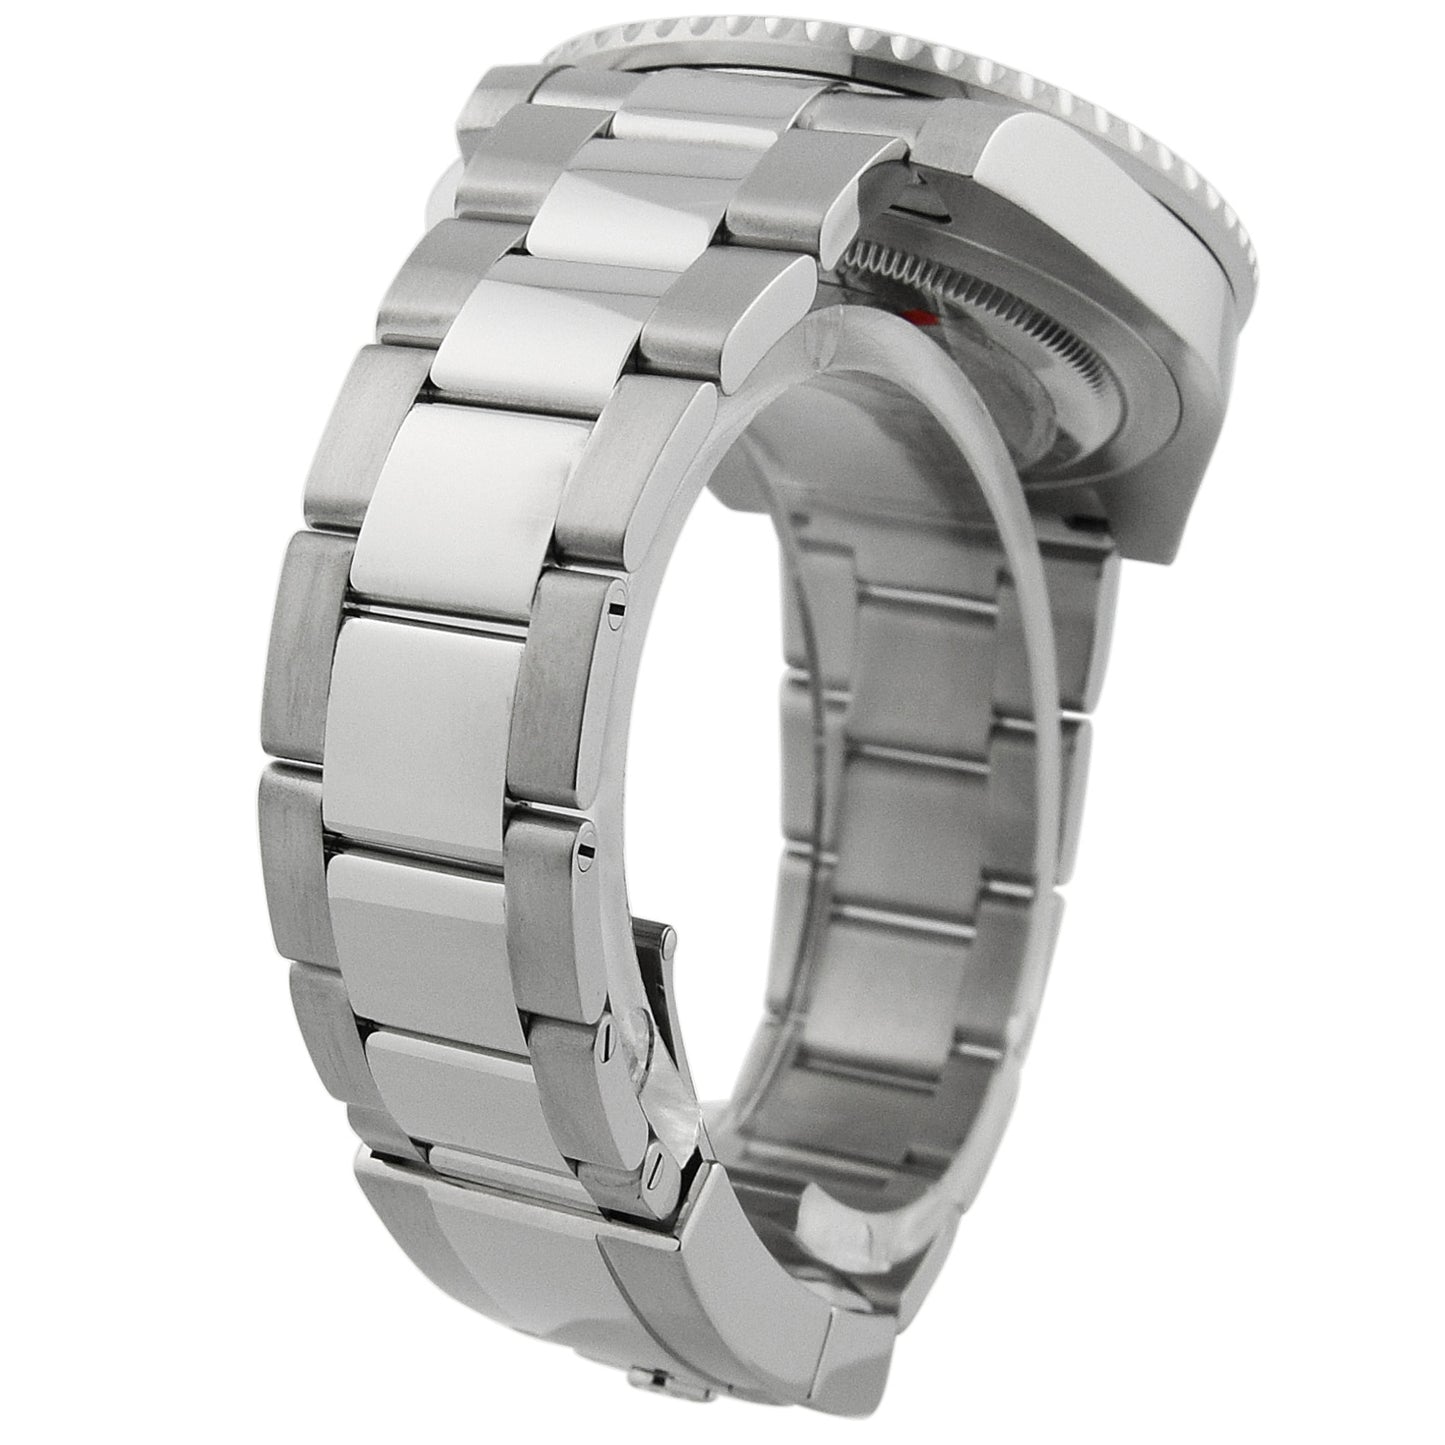 Rolex Mens GMT Master II "SPRITE" Stainless Steel 40mm Black Dot Dial Watch Reference# 126720VTNR - Happy Jewelers Fine Jewelry Lifetime Warranty